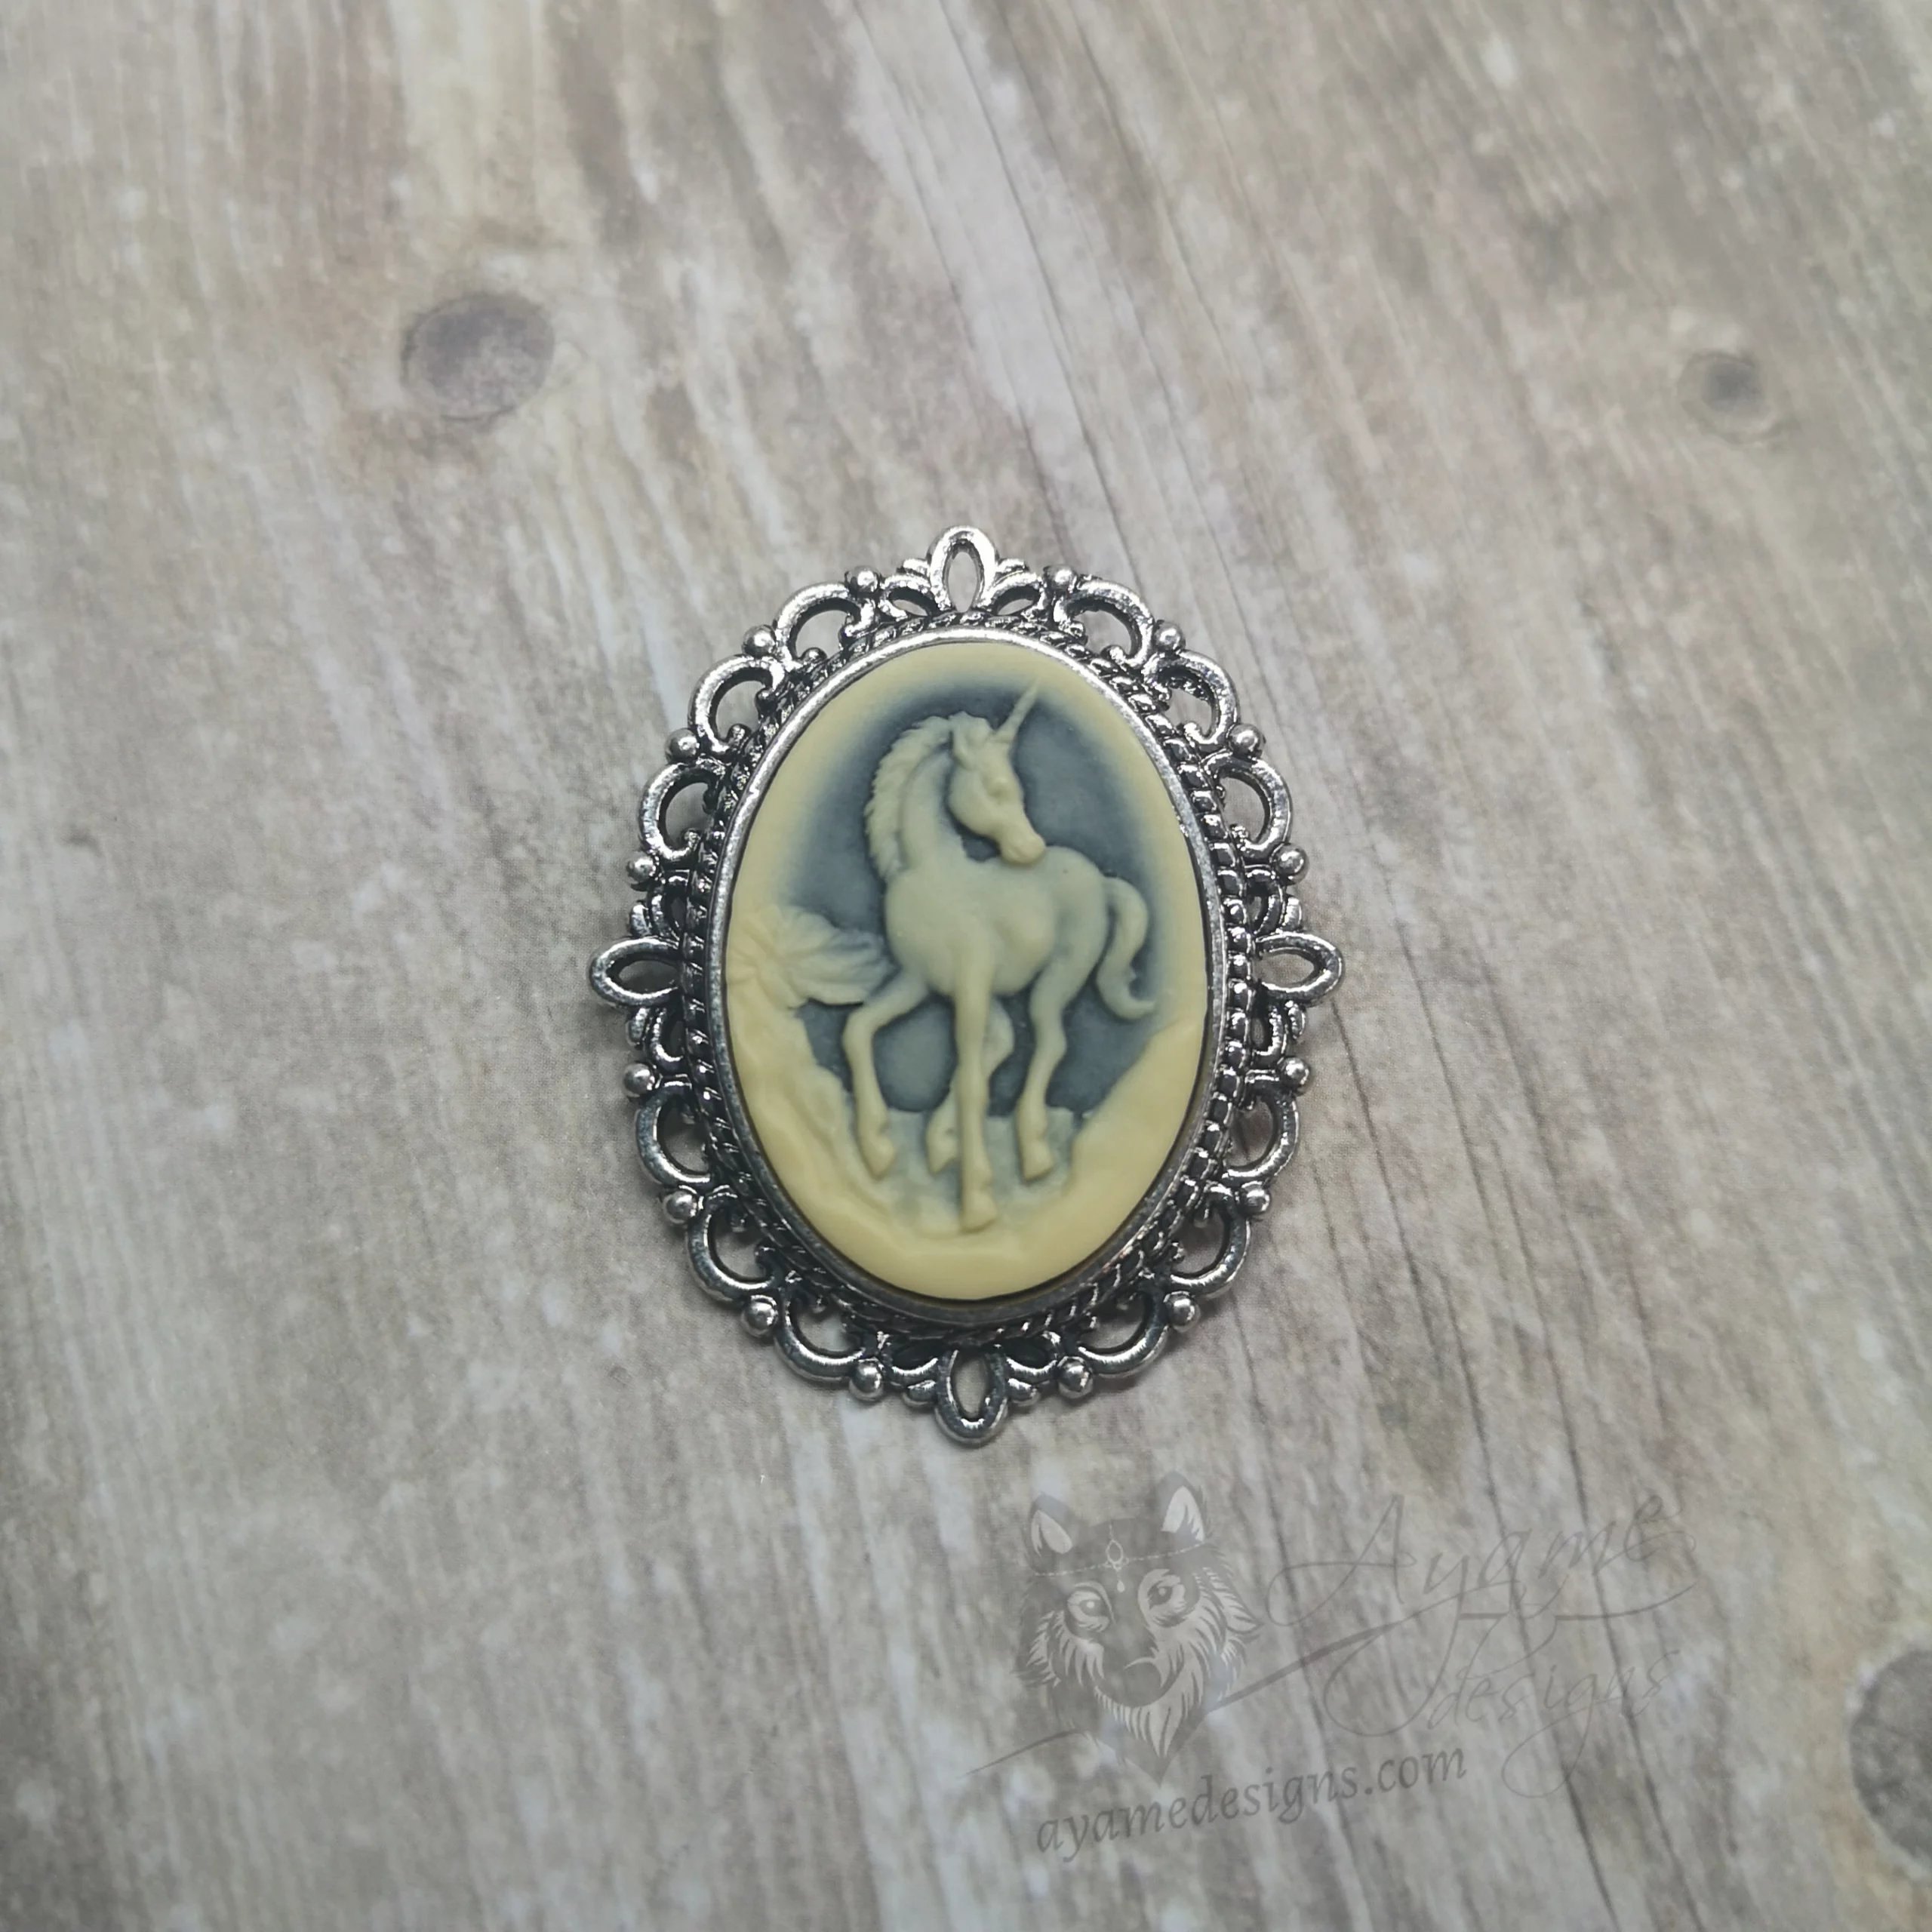 Small resin unicorn cameo brooch